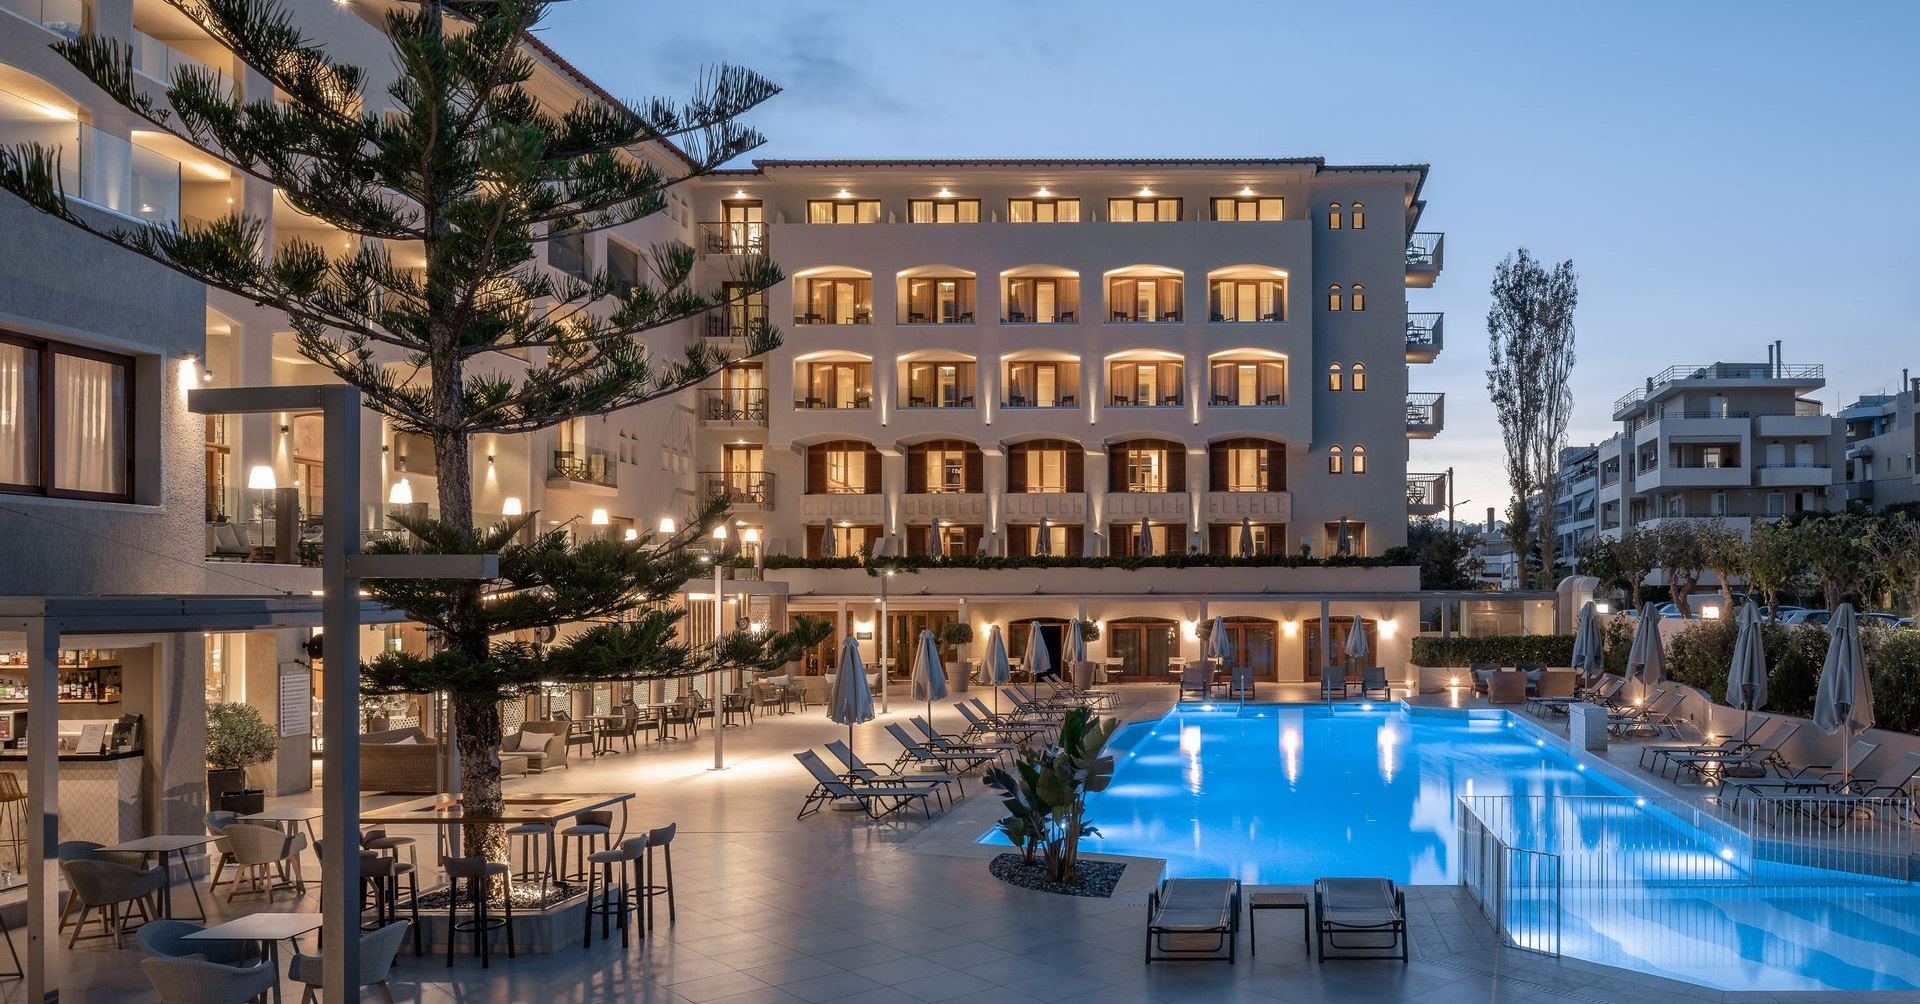 4* Theartemis Palace Hotel - Ρέθυμνο, Κρήτη ✦ 2 Ημέρες